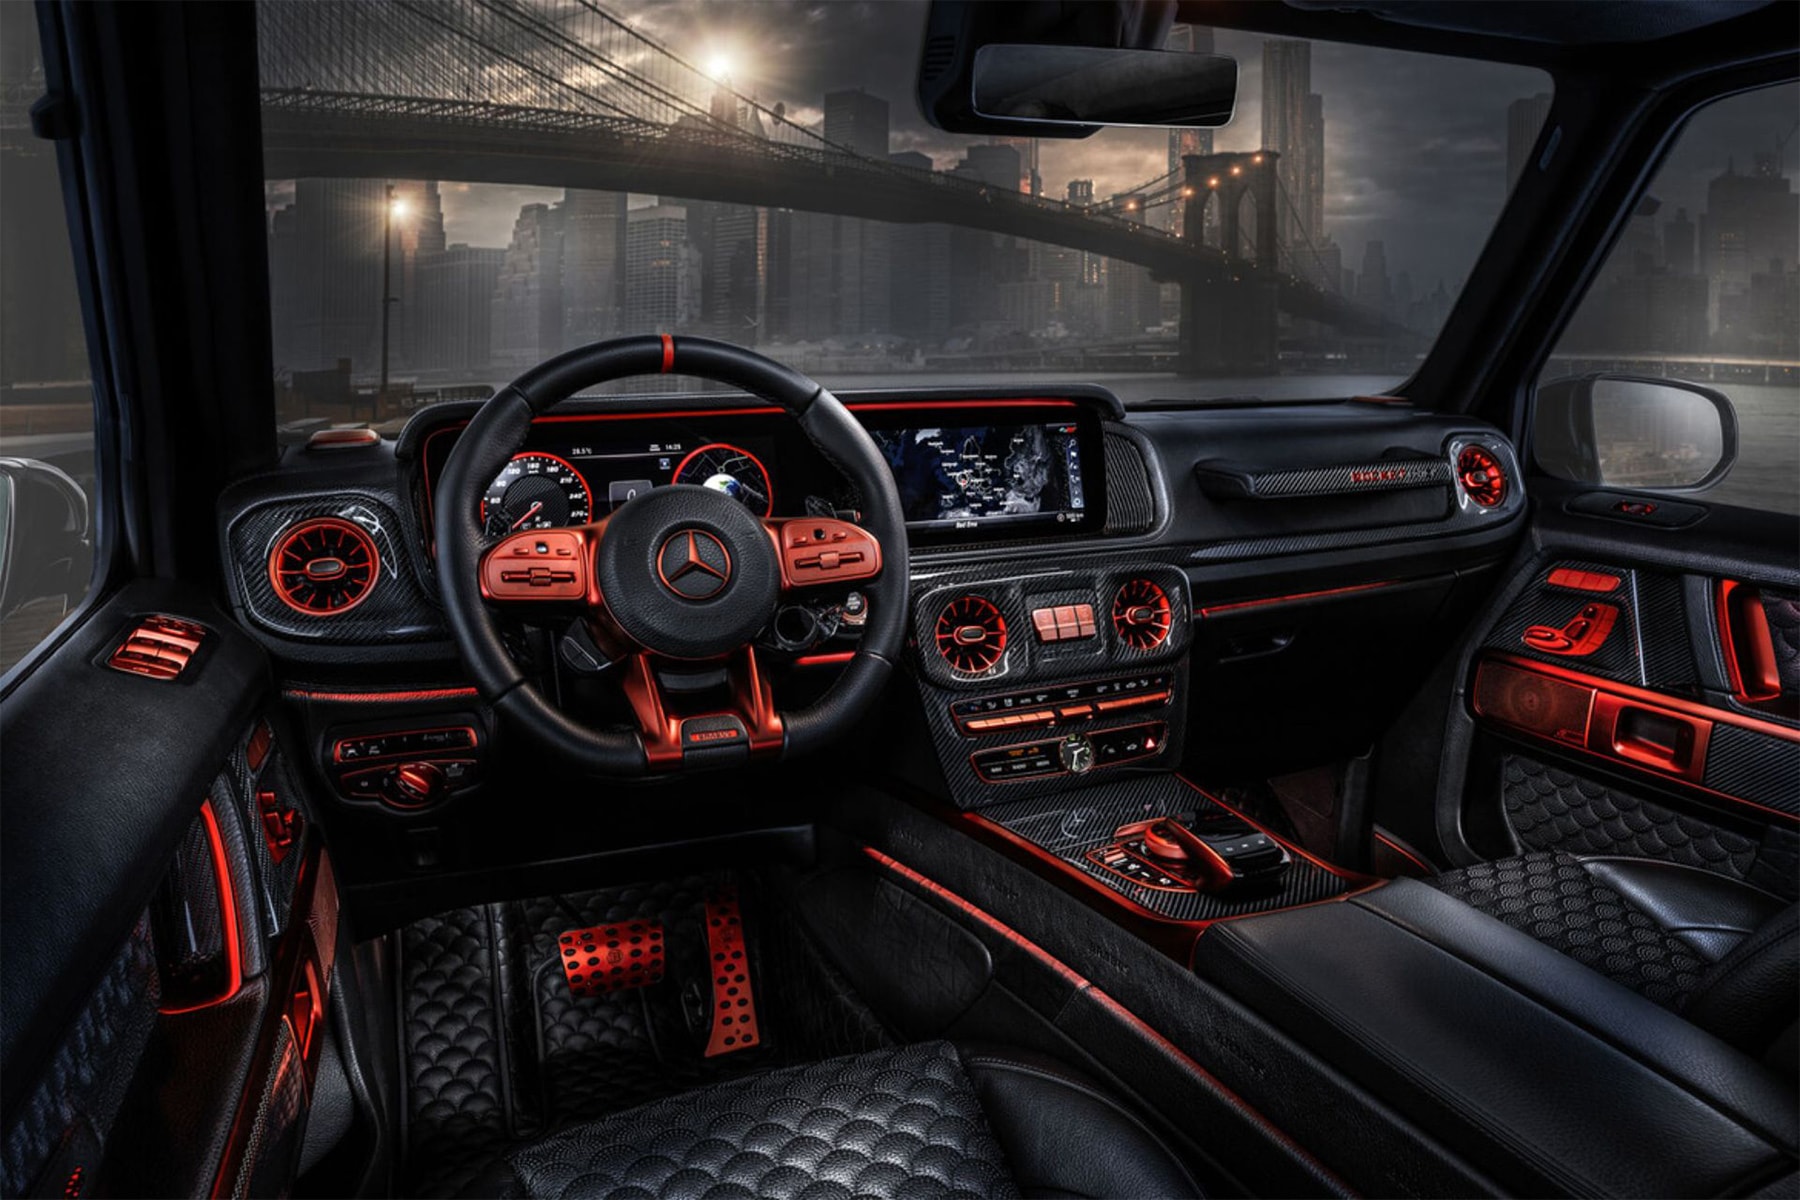 Brabus 發表 888 匹馬力碳纖維寬體 Mercedes-AMG G63 改裝 Pick-up 車型